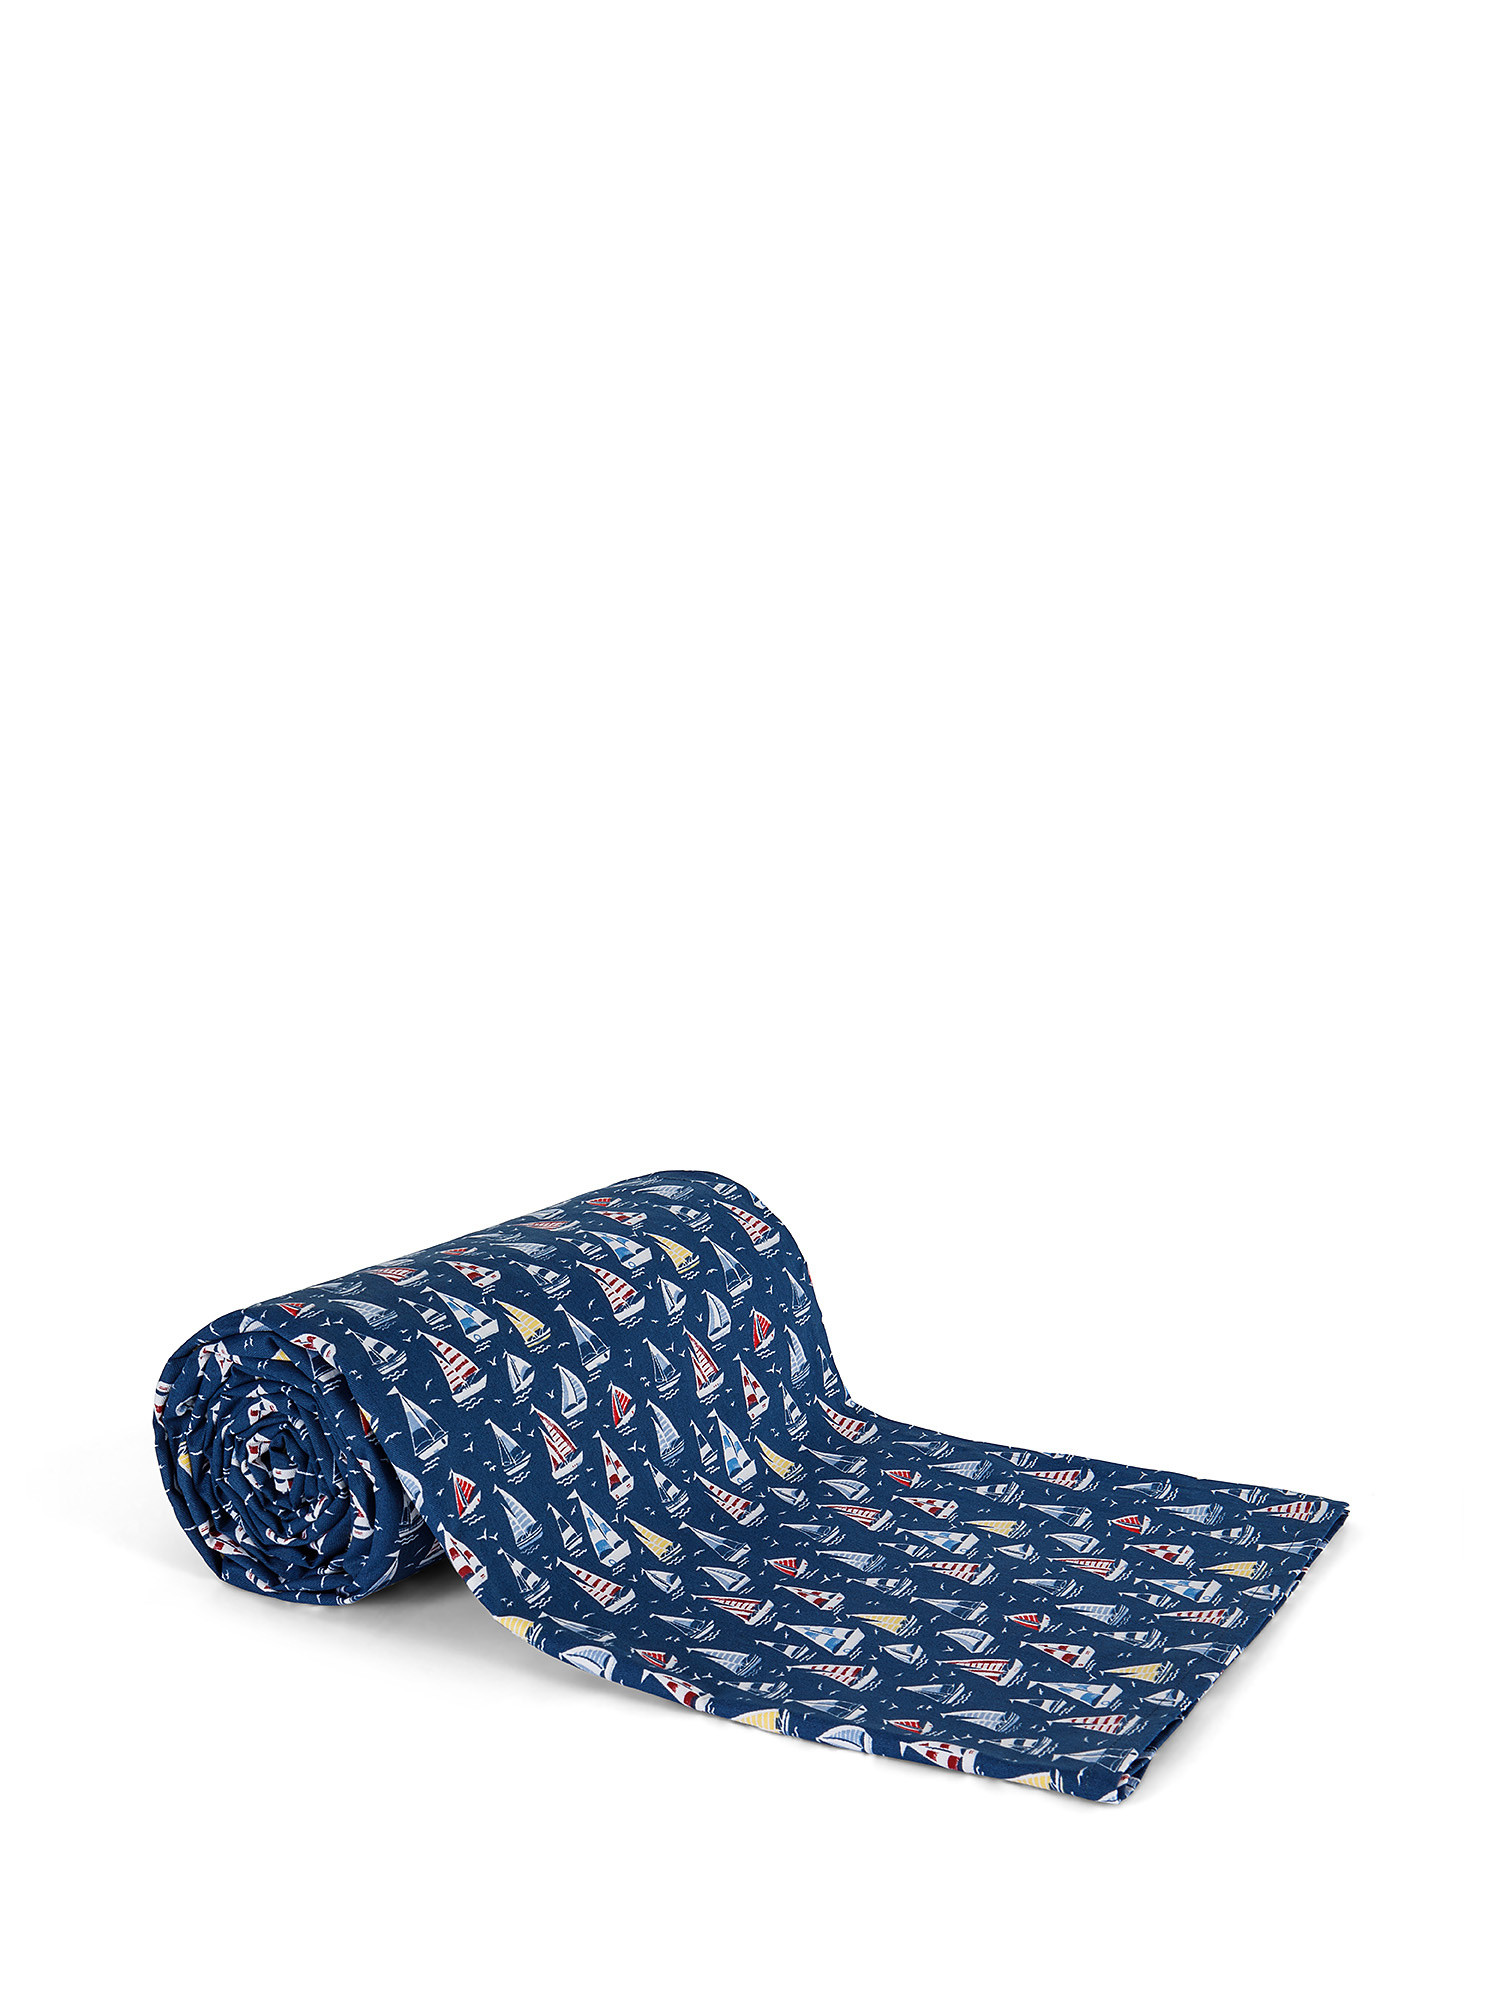 Sails print cotton furnishing towel, Blue, large image number 0